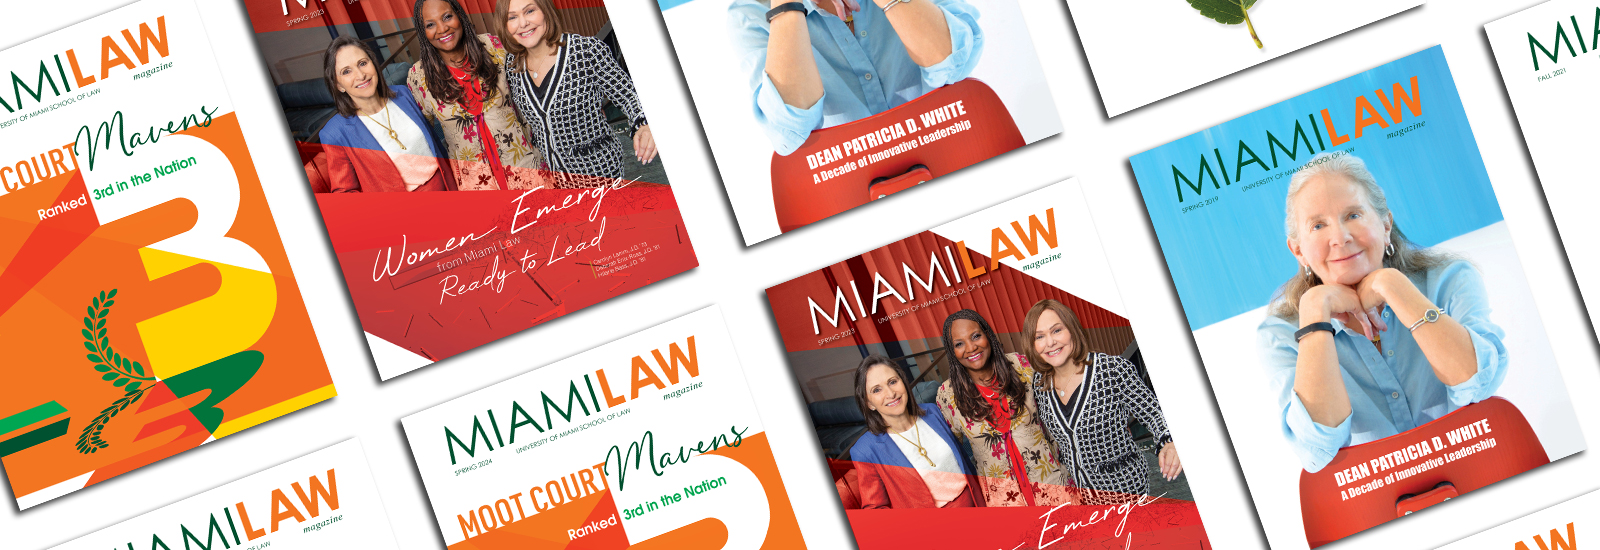 About Miami Law Magazine